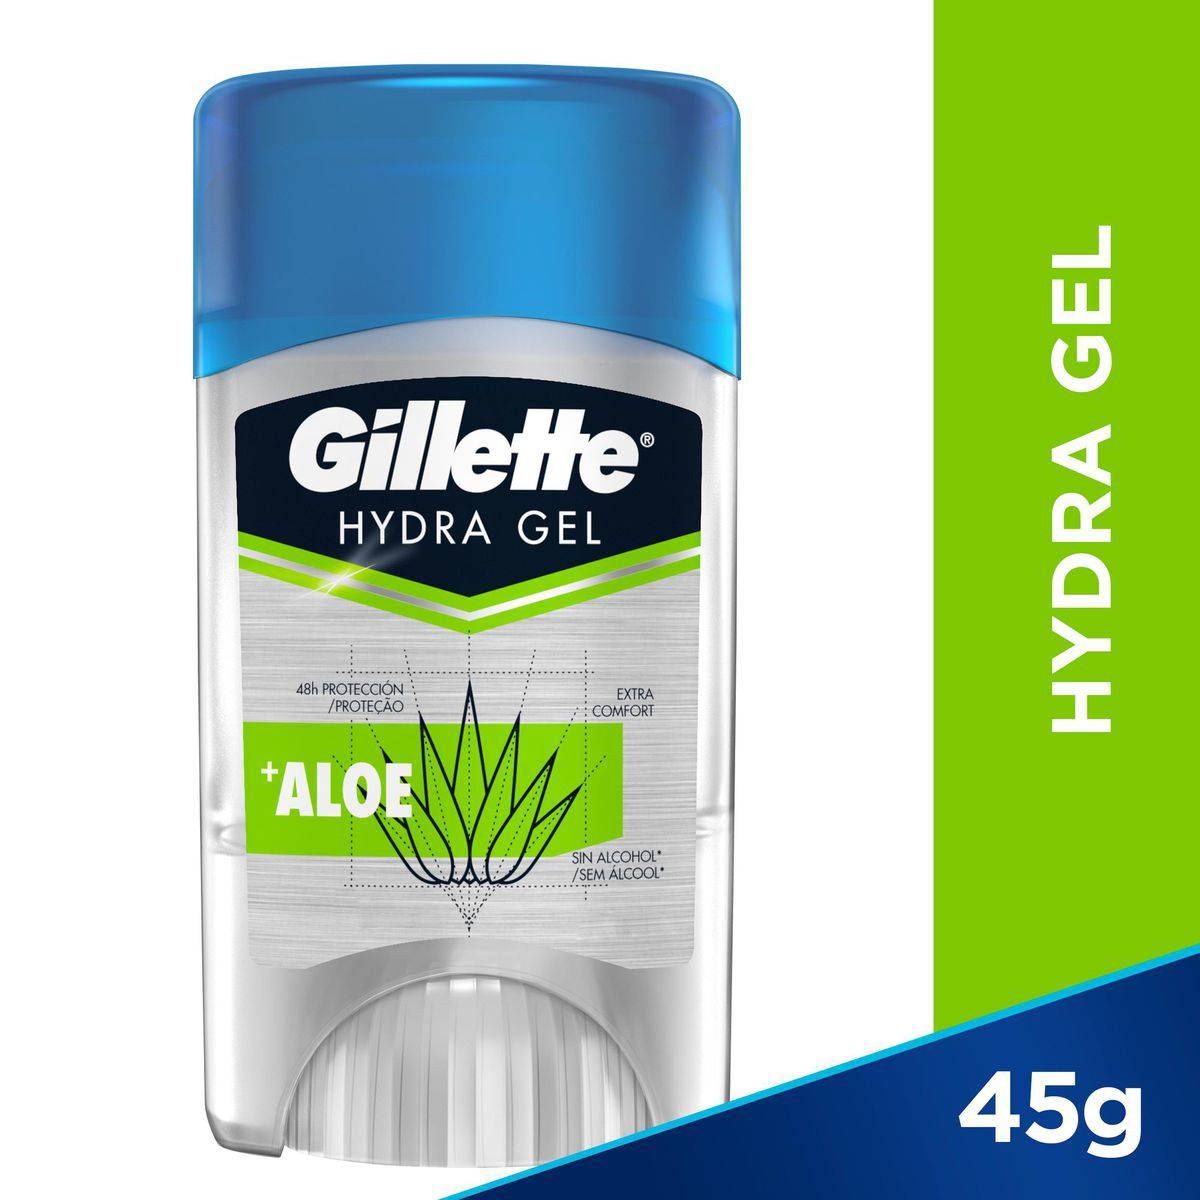 Gillette Desodorante Antitranspirante Clear Gel Cool Wave 82g